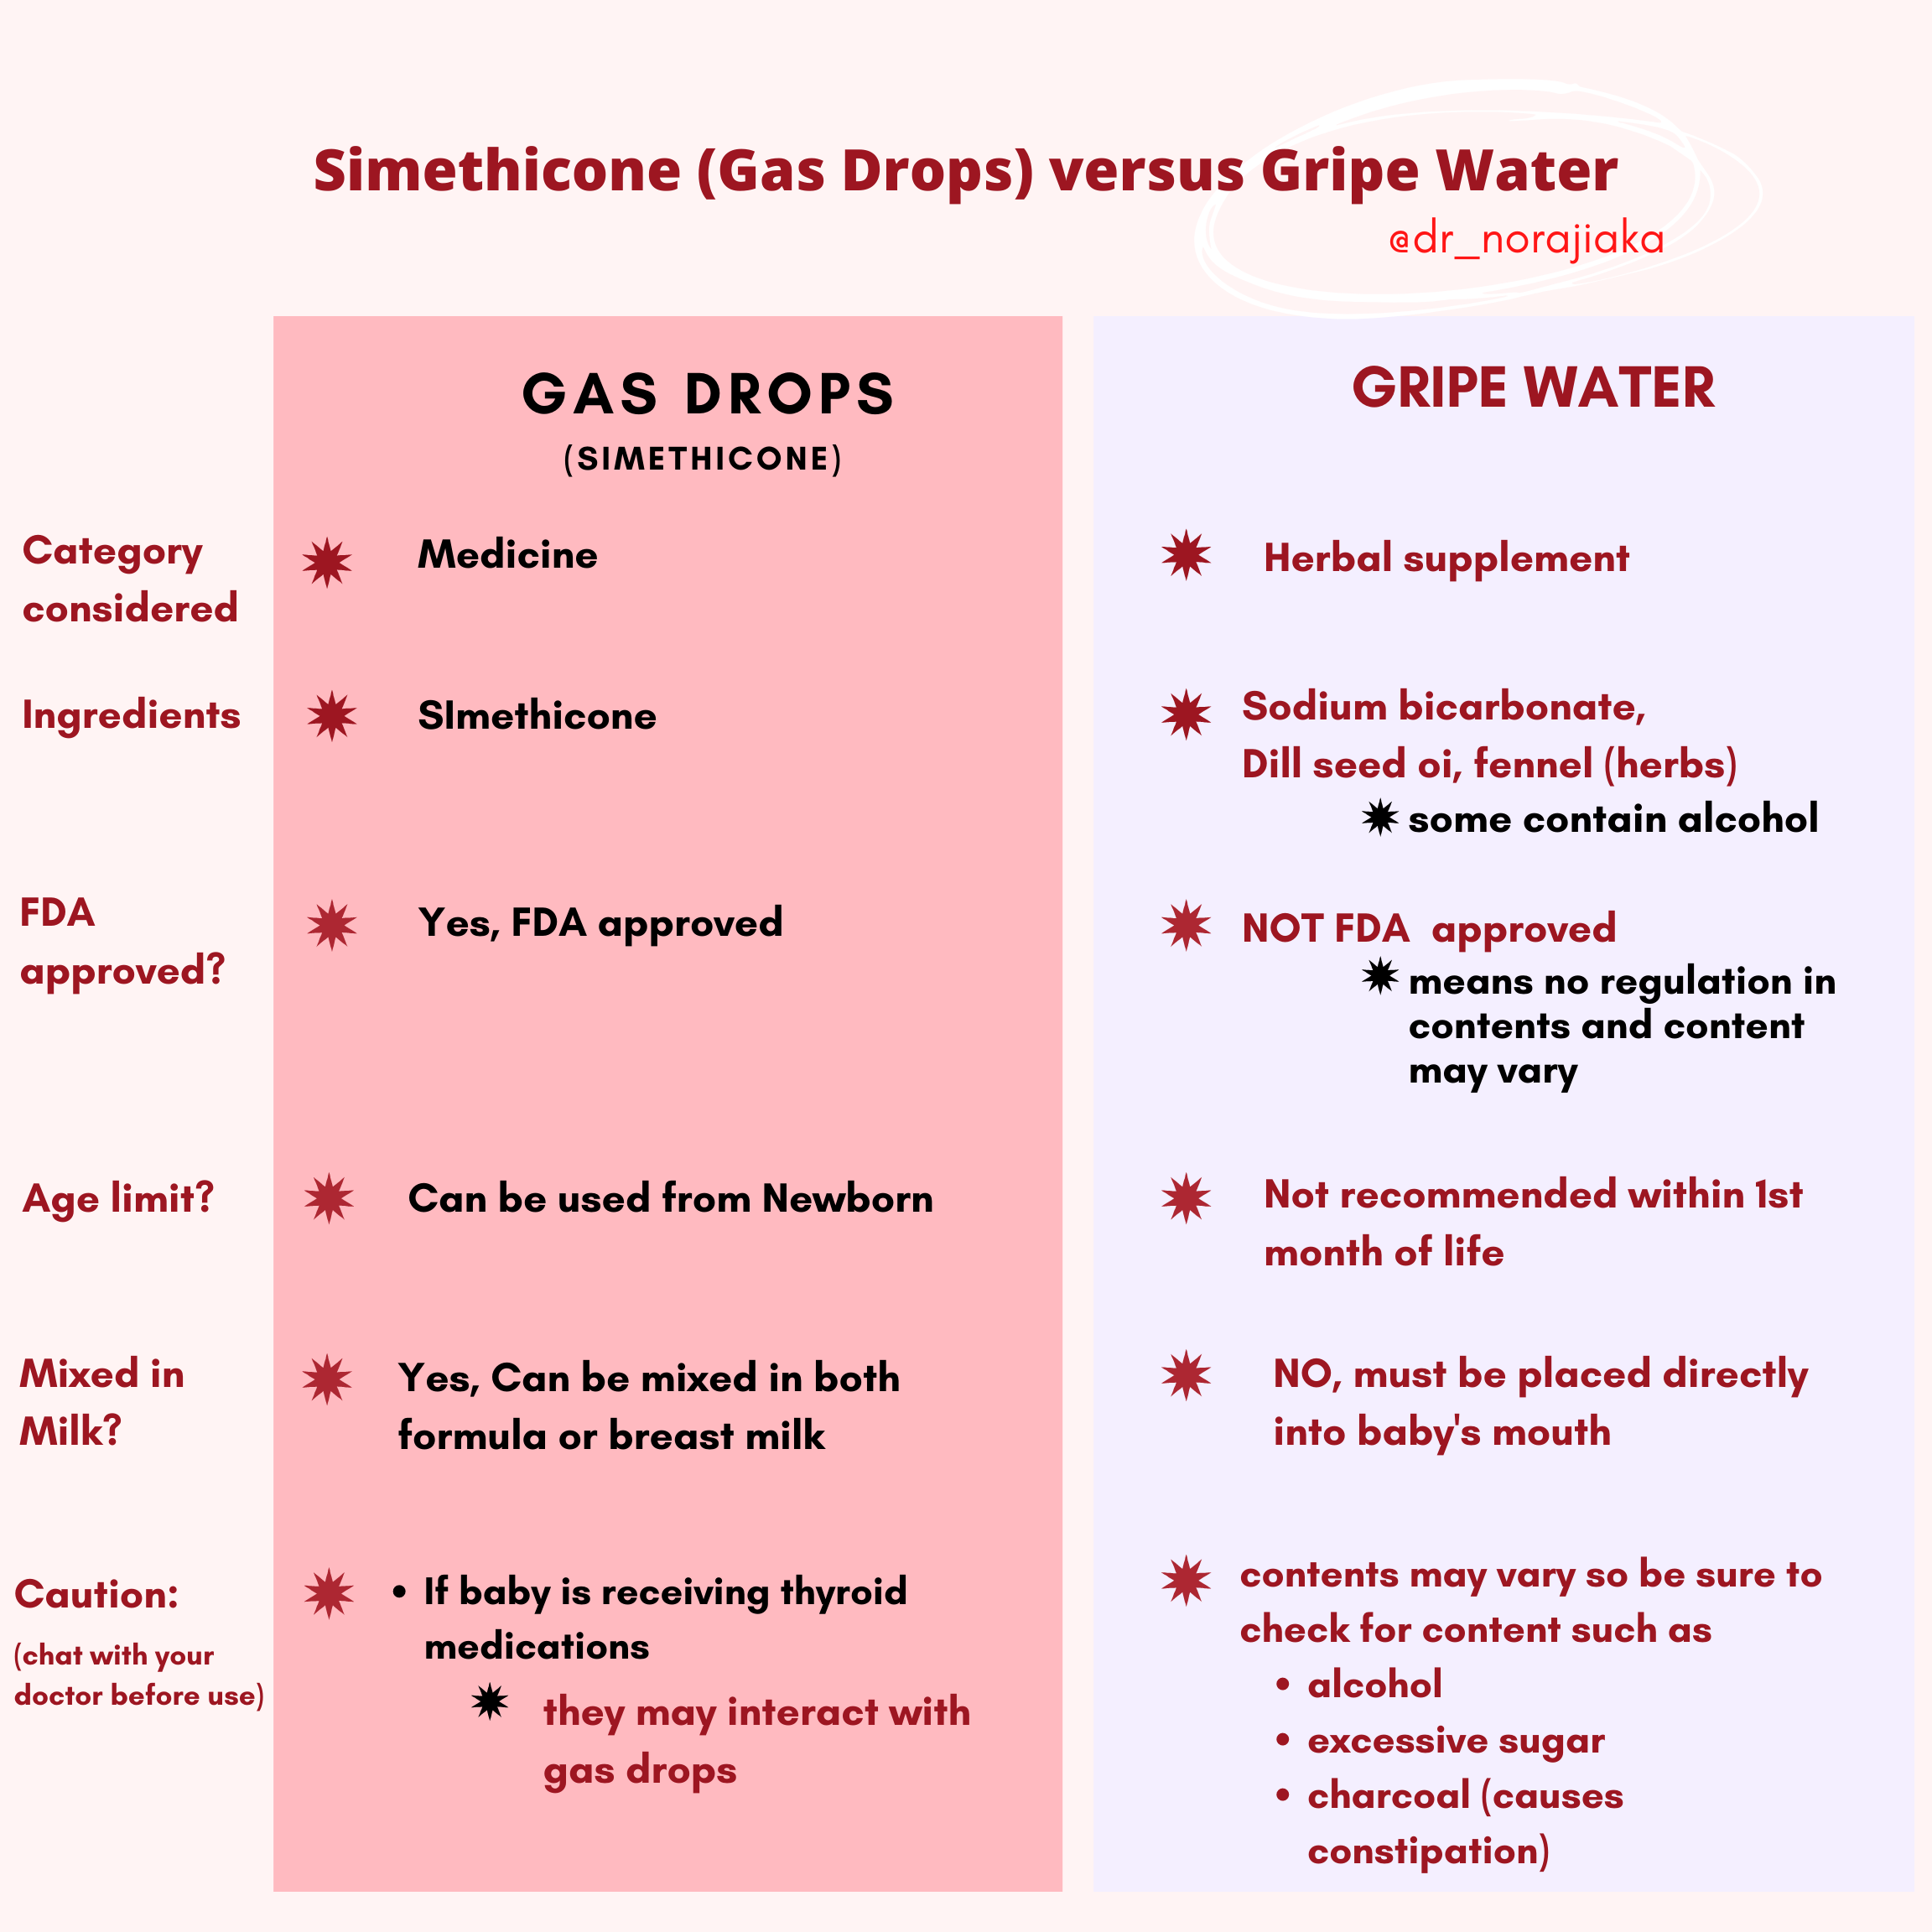 Gas Drops versus Gripe water - Dr Nkeiruka Orajiaka